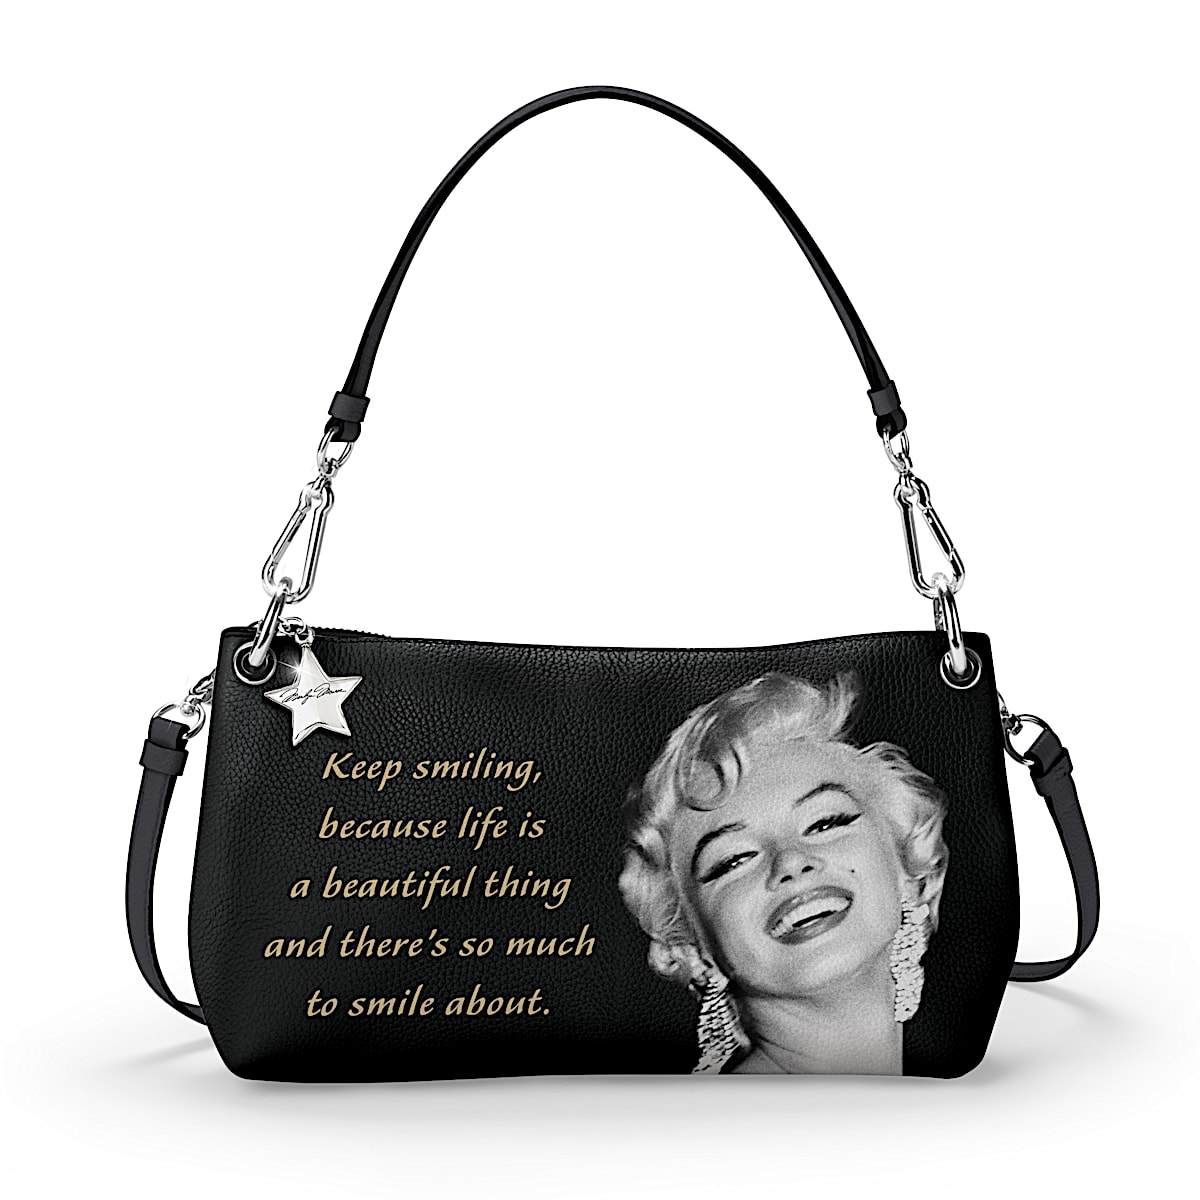 marilyn monroe handbags purse